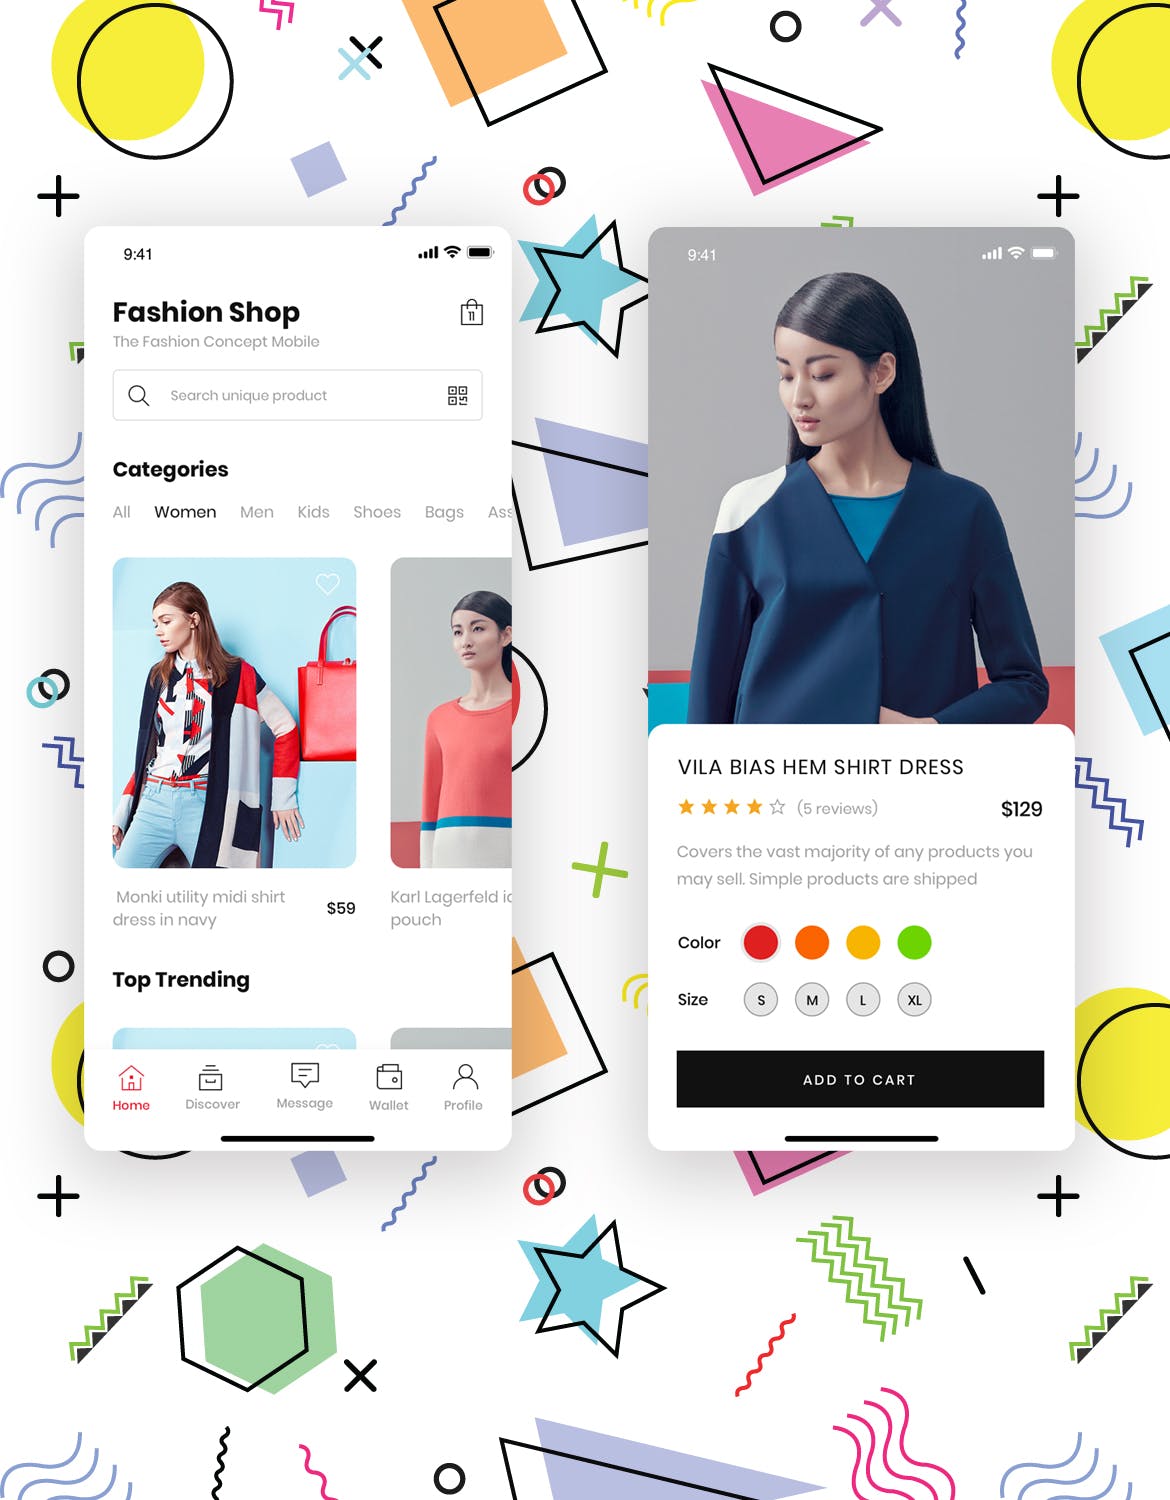 时尚服饰品牌网店APP应用UI设计16图库精选套件 Fashion Store Mobile App UI Kit插图(1)